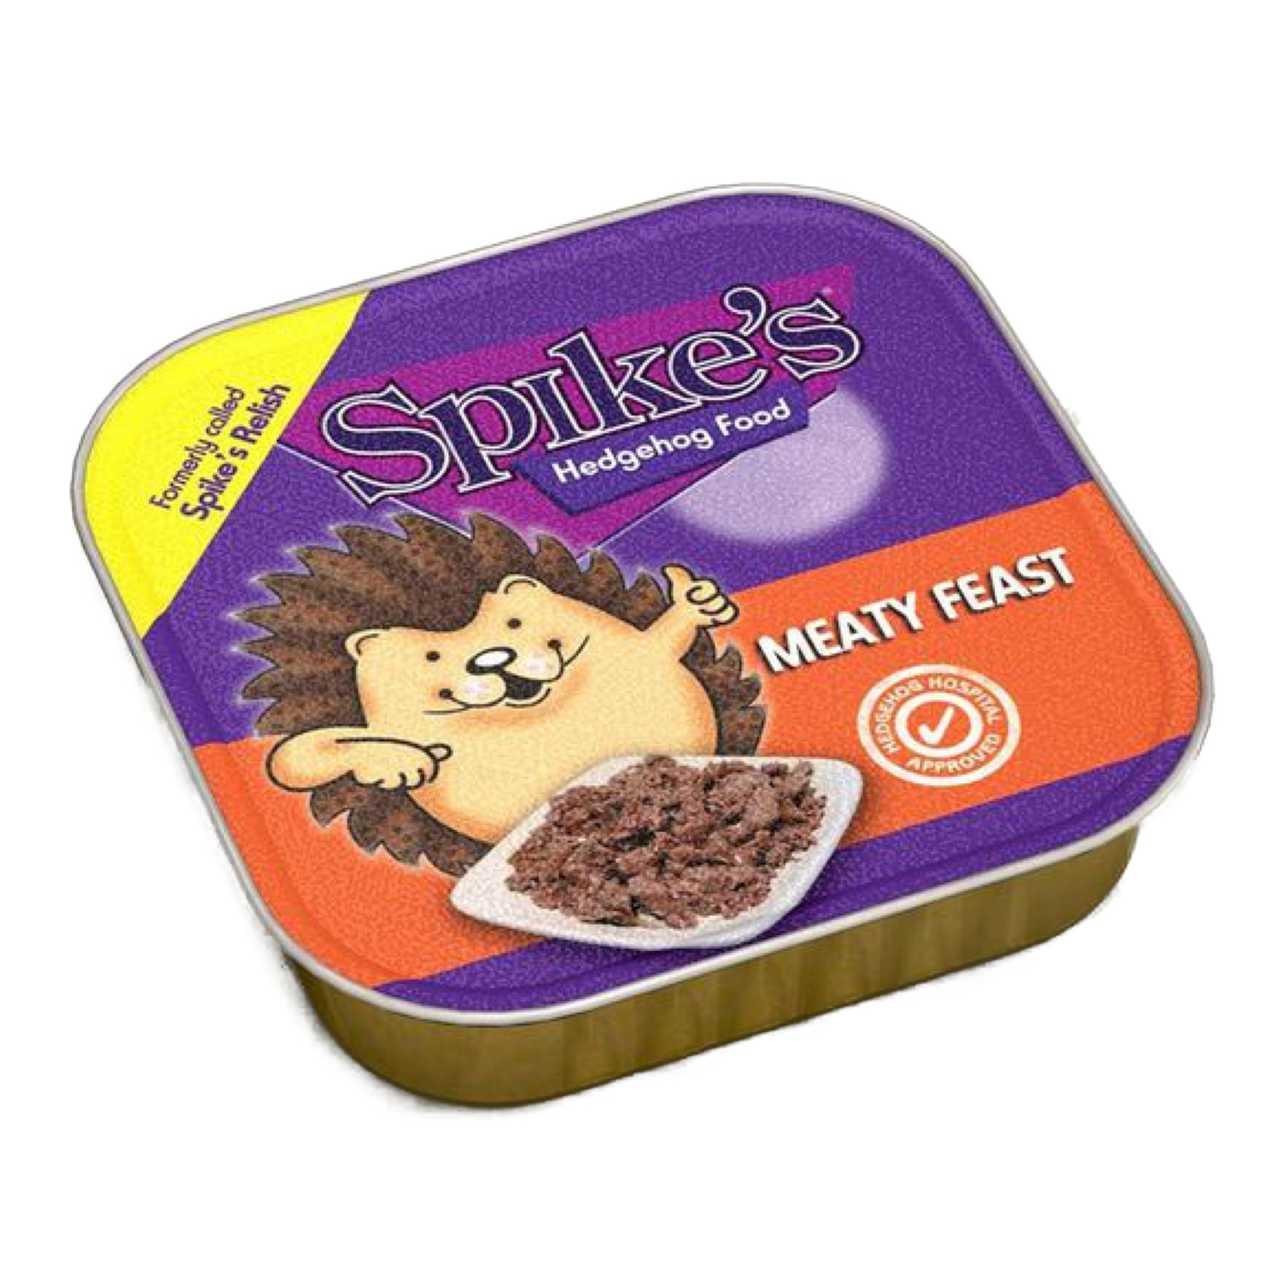 An image of Spikes Meaty Feast Hedgehog Food